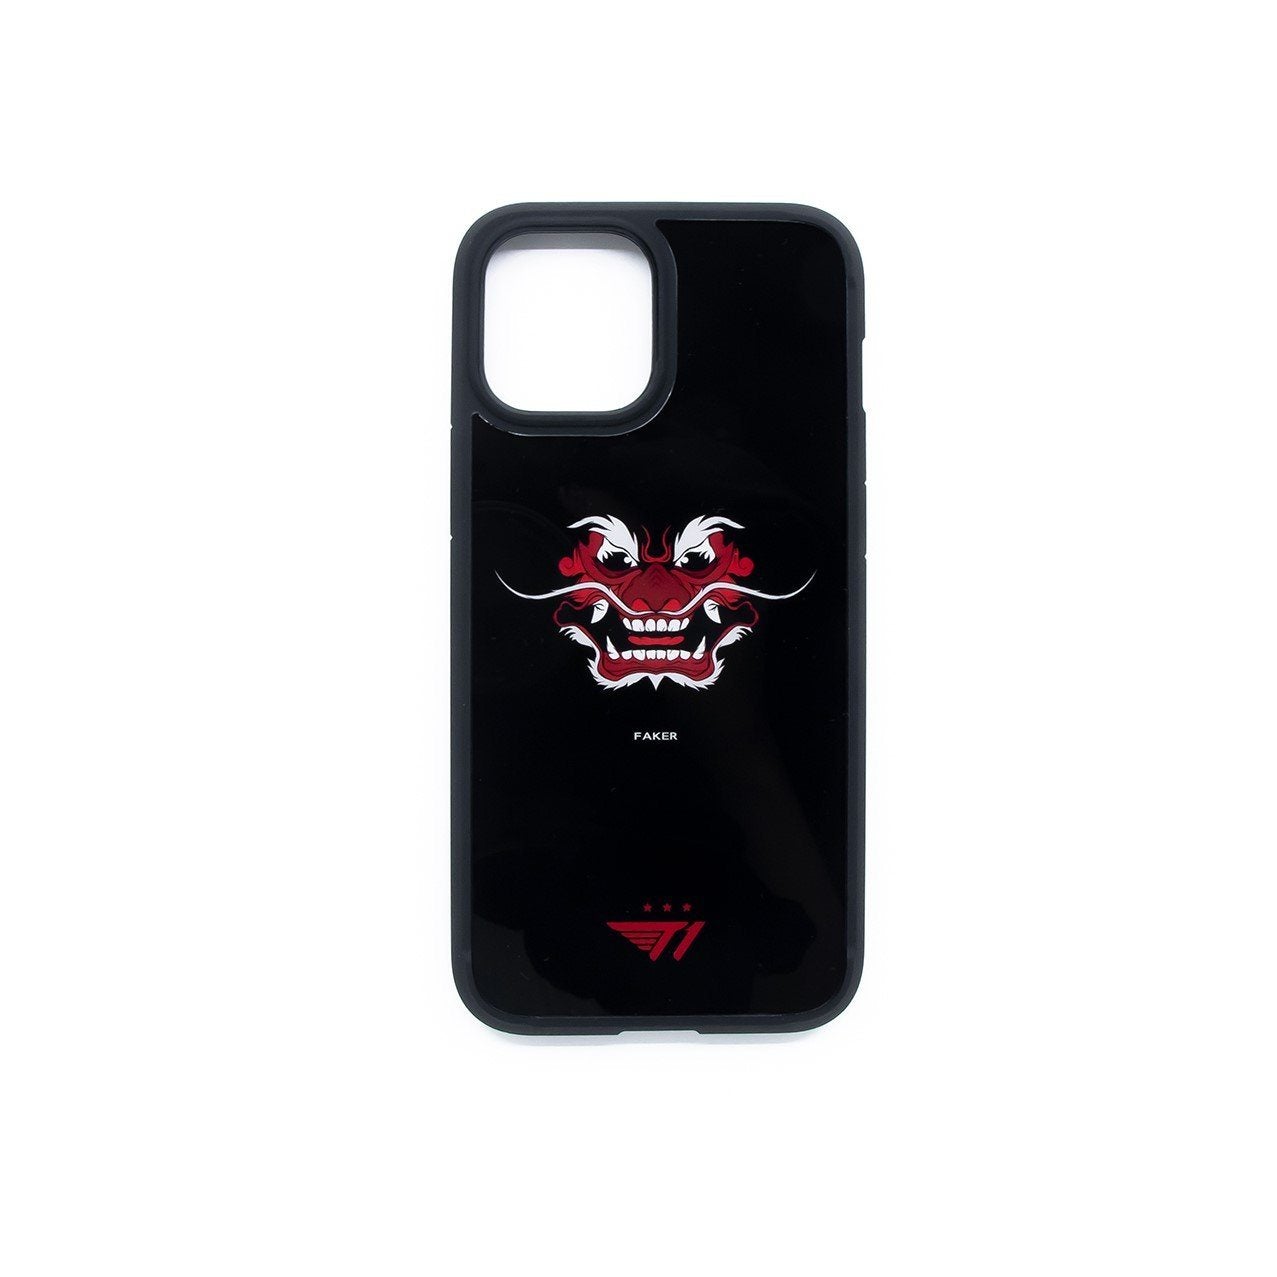 T1 아이폰 12 프로 맥스 케이스 - Faker Demon King Edition